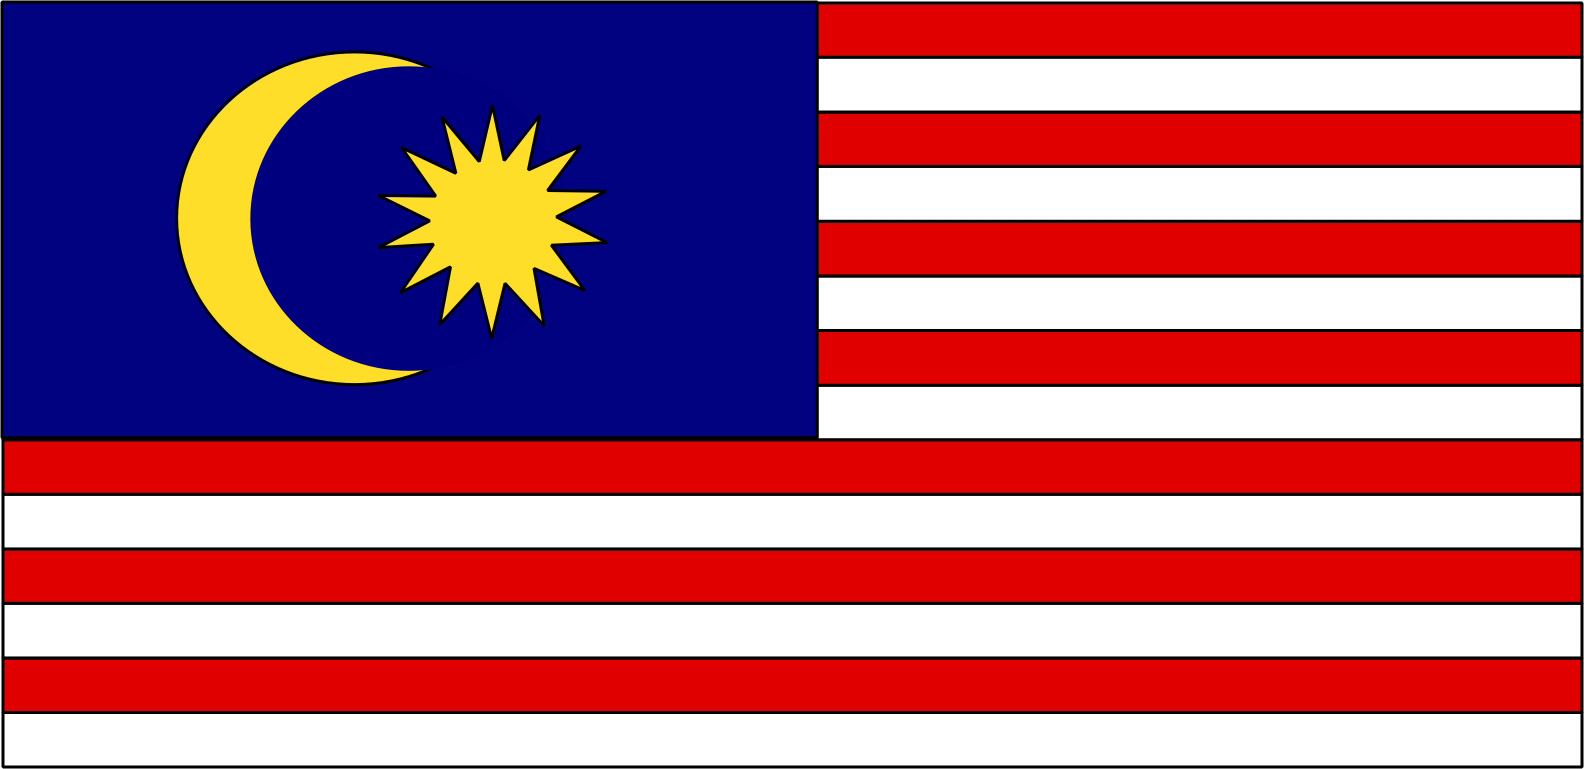 Bandeira da Malsia<a style='float:right;color:#ccc' href='https://www3.al.sp.gov.br/repositorio/noticia/03-2008/malasia bandeira.jpg' target=_blank><i class='bi bi-zoom-in'></i> Clique para ver a imagem </a>